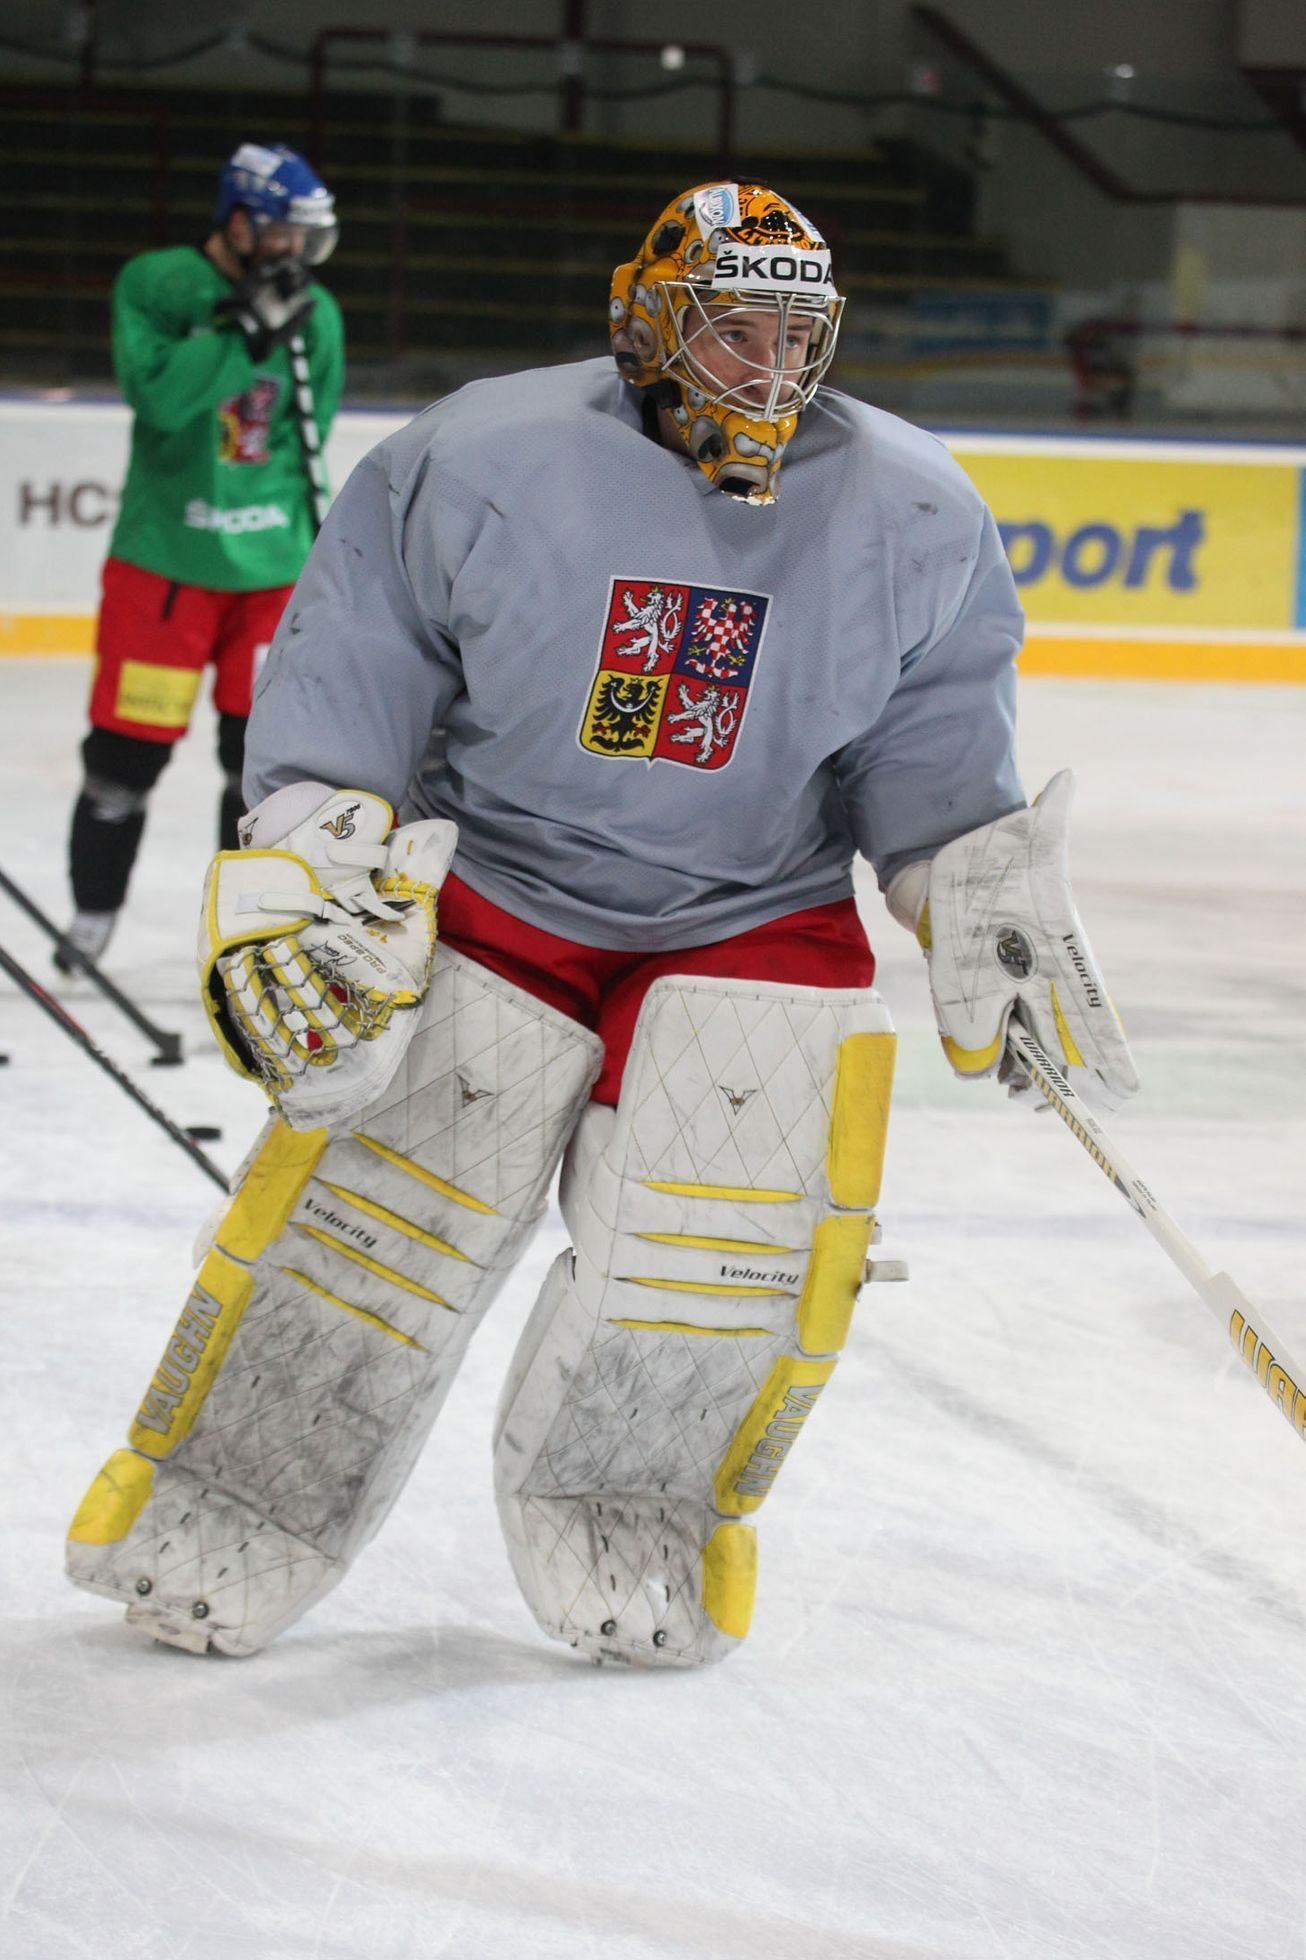 Trénink hokejové reprezenatace: Pavel Francouz